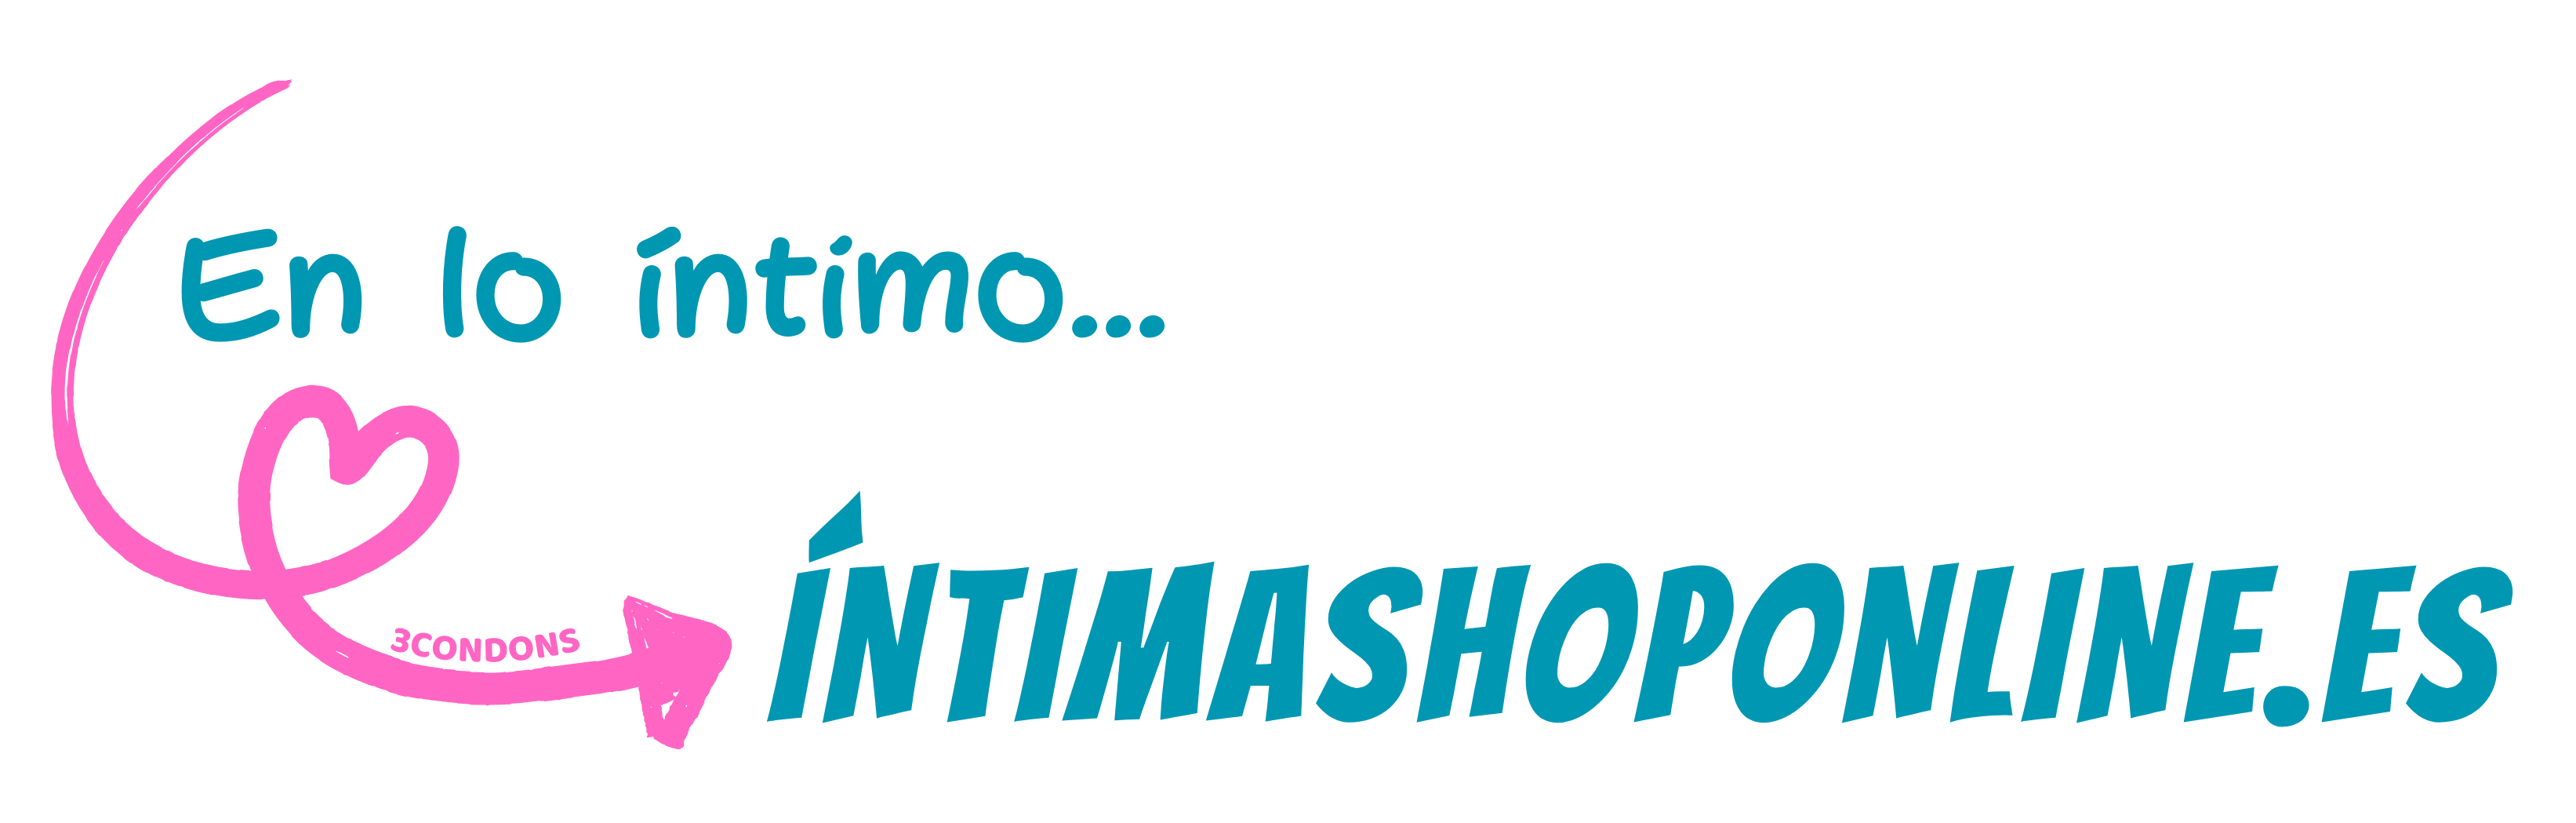 Intima Shop Online - 3CONDONS